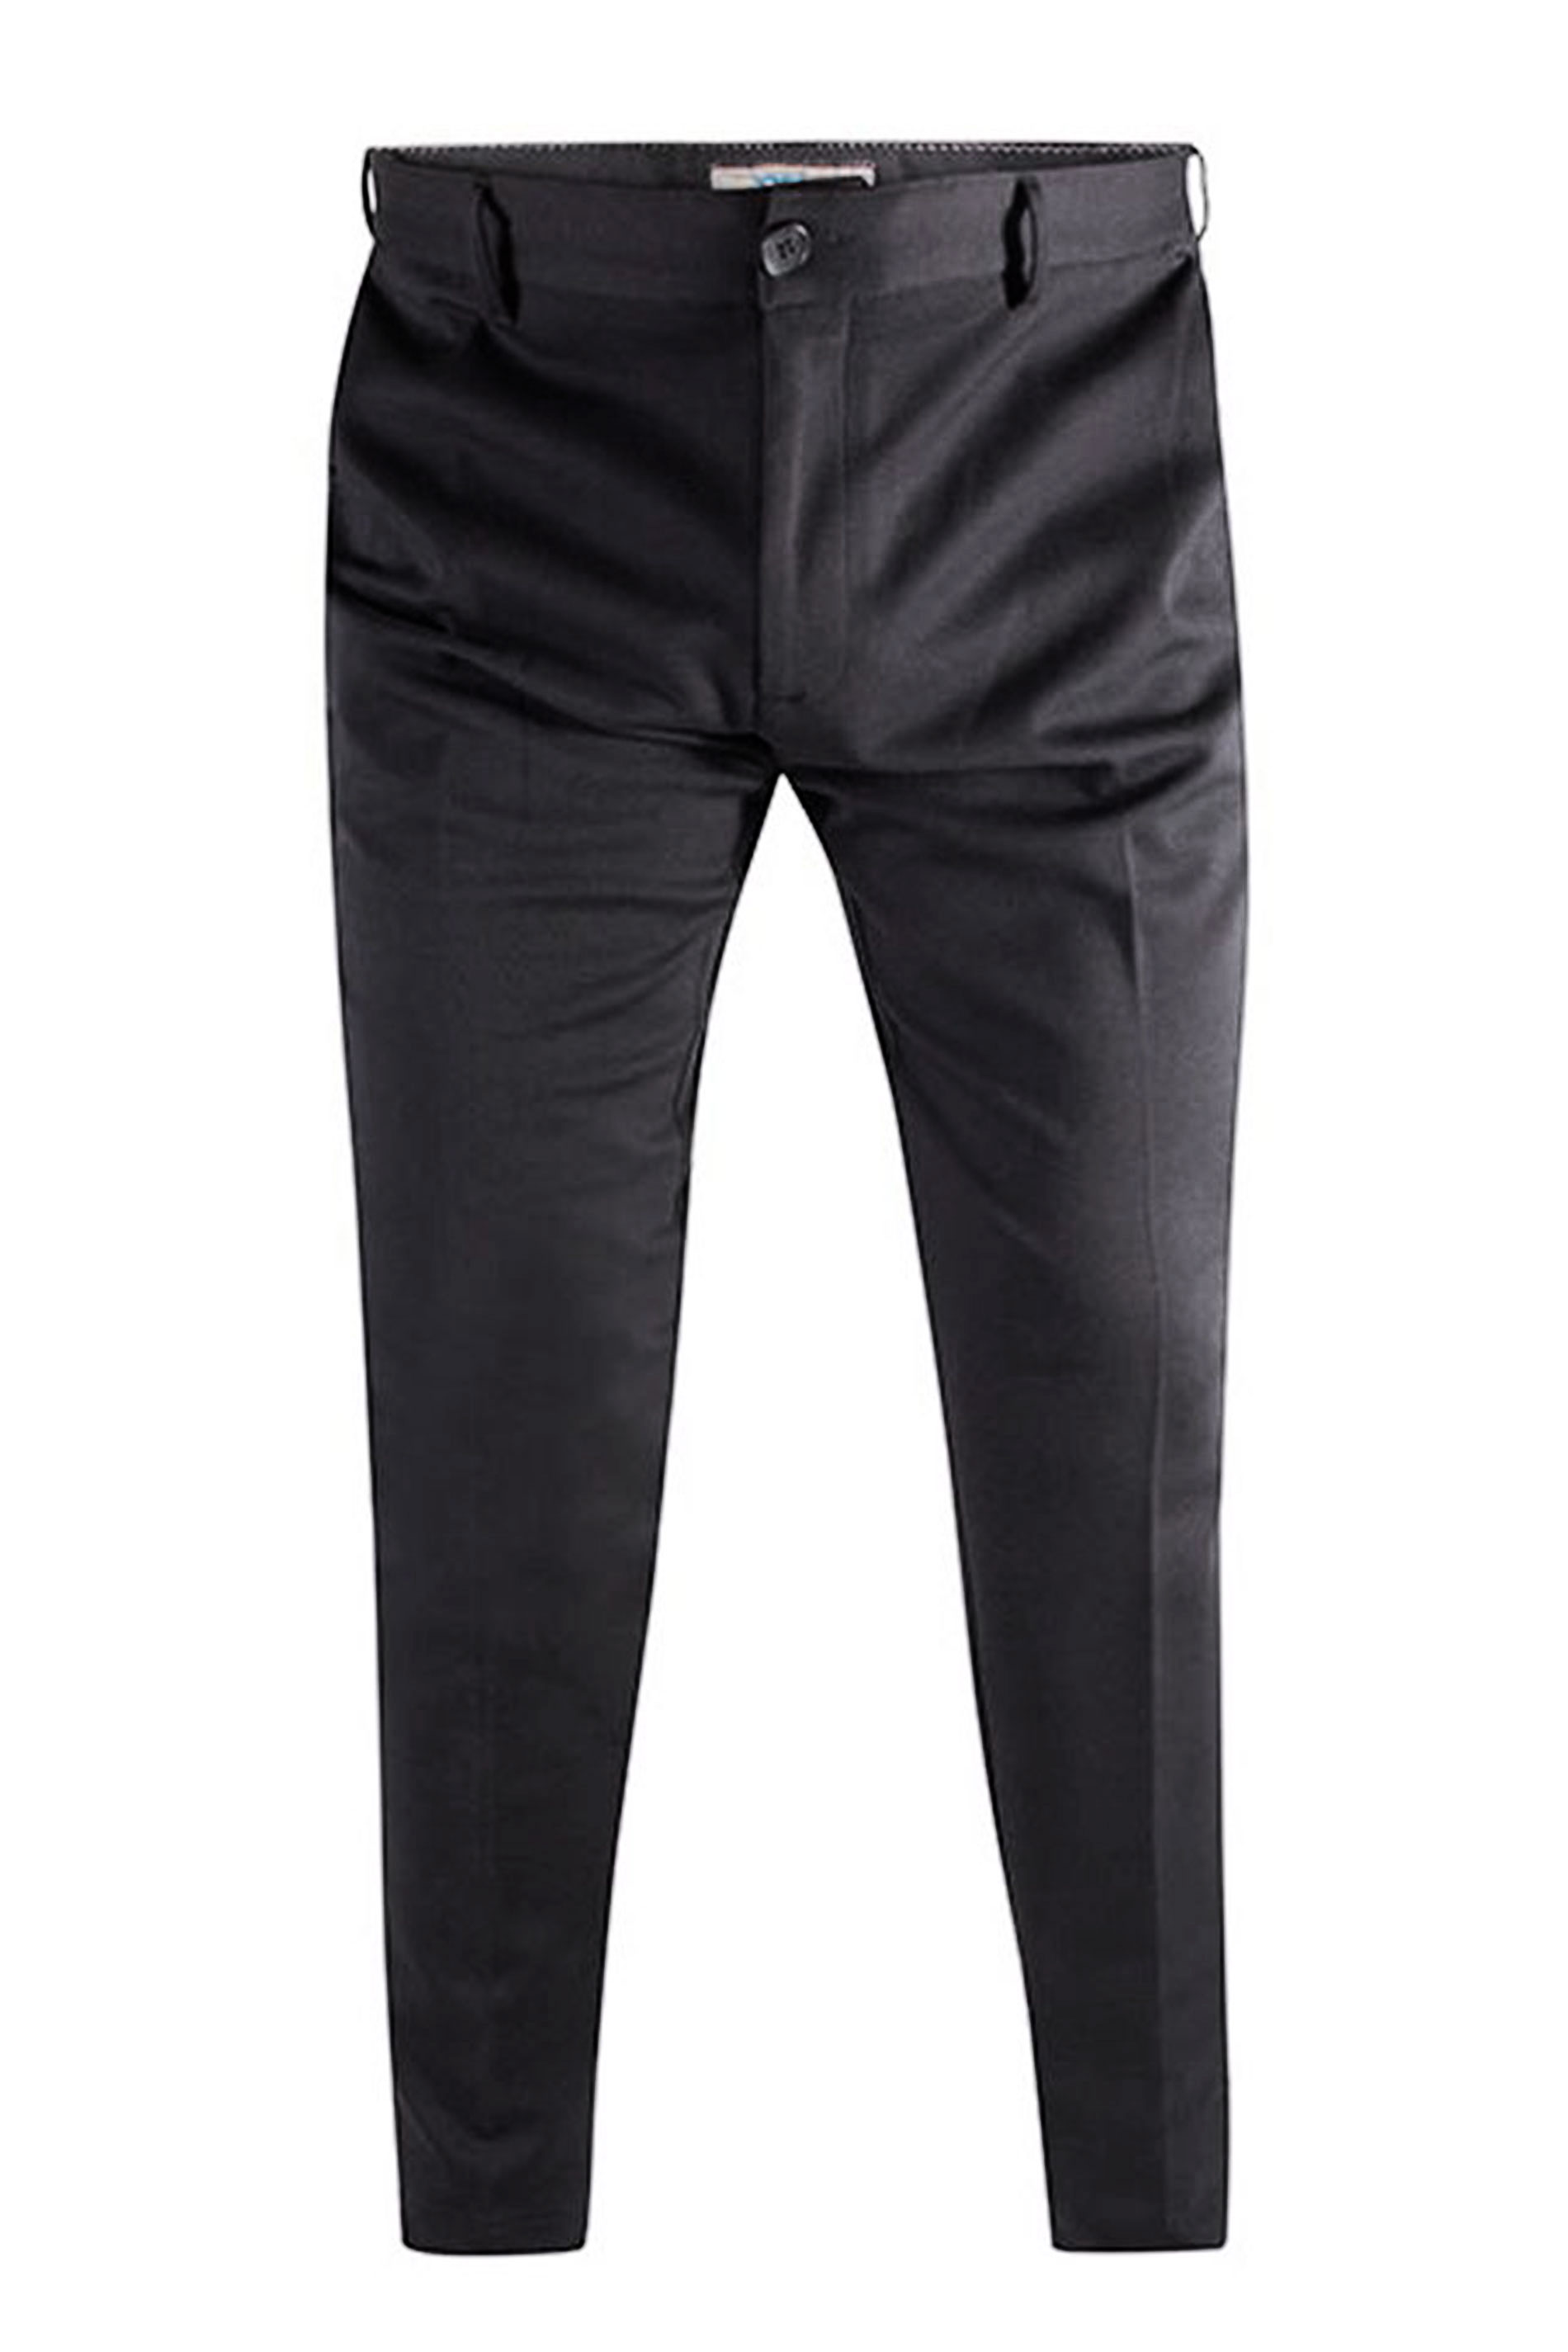 D555 Black Stretch Trousers | BadRhino 3